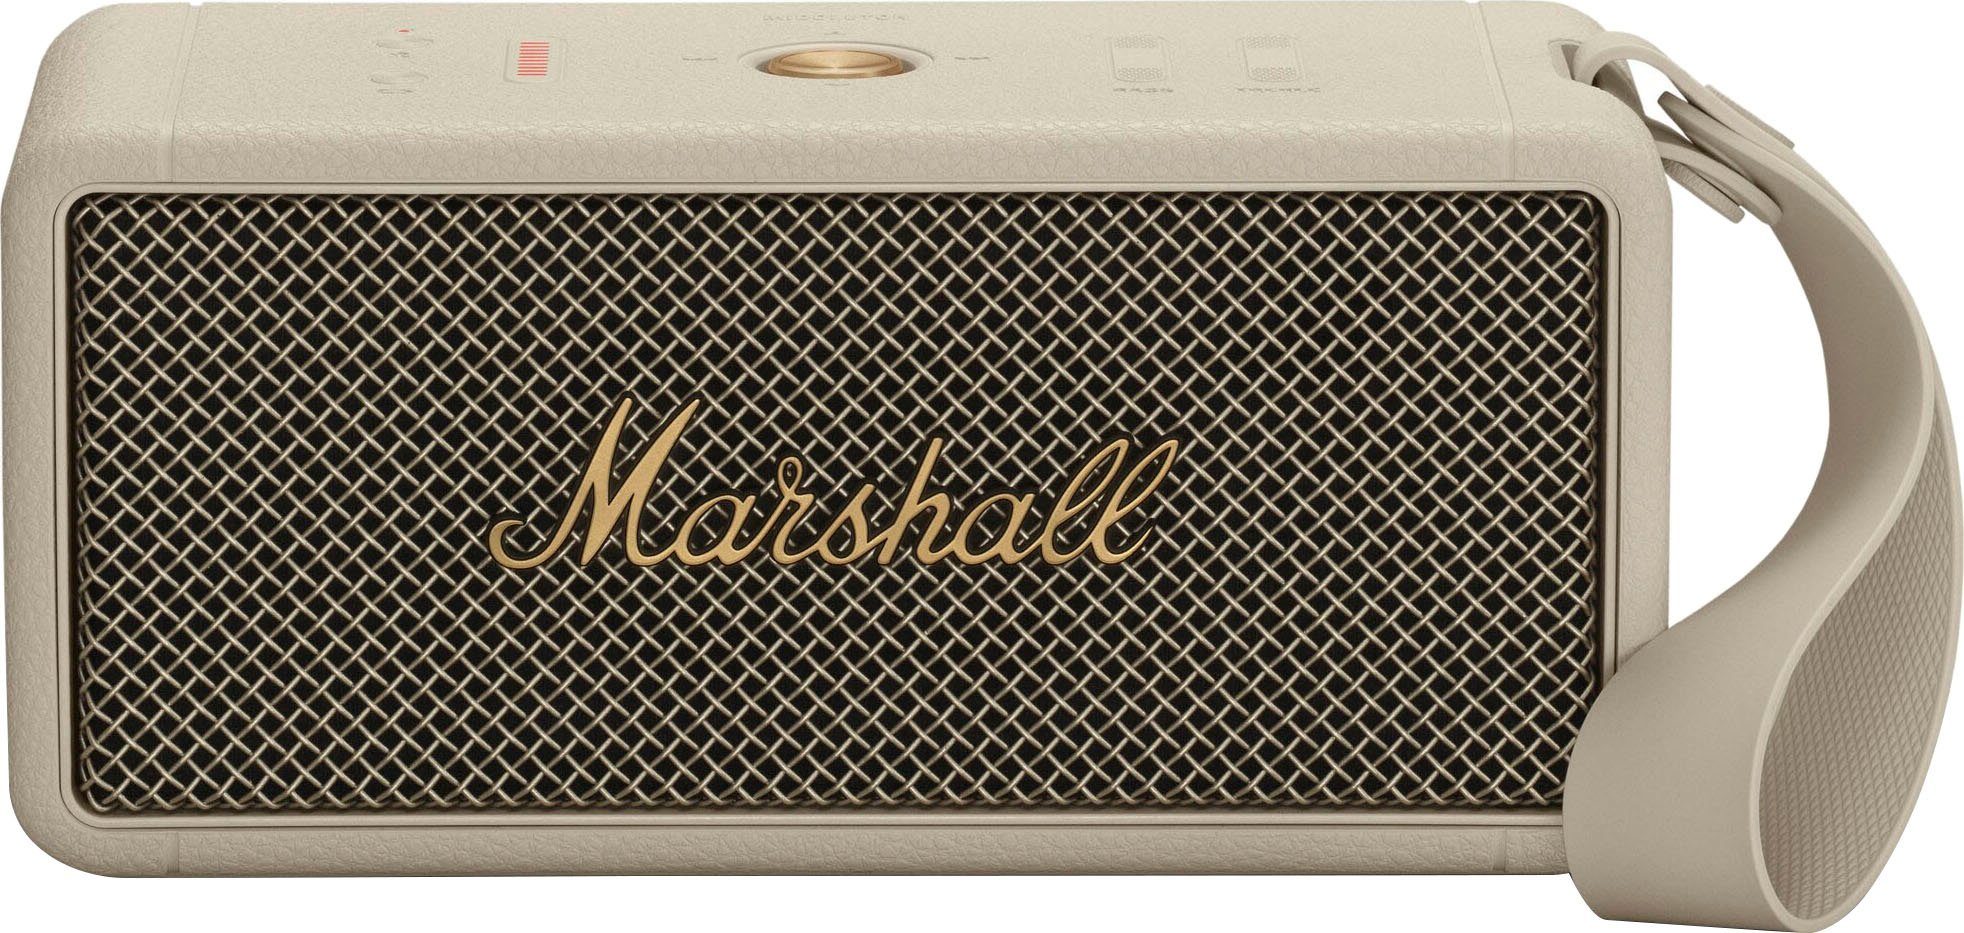 Marshall Middleton Stereo Lautsprecher (Bluetooth, 110 W) Cream